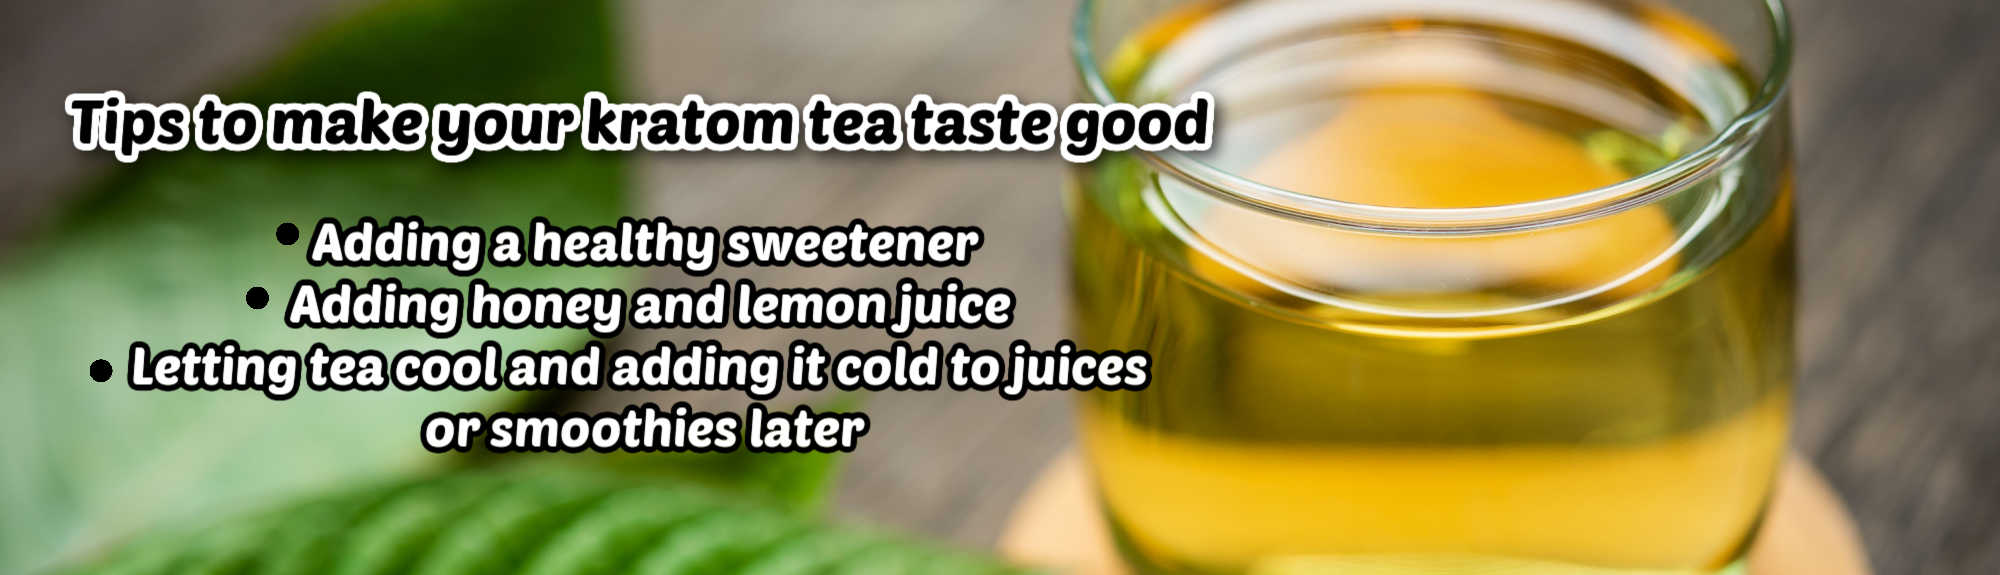 image of tips to make your kratom tea taste good